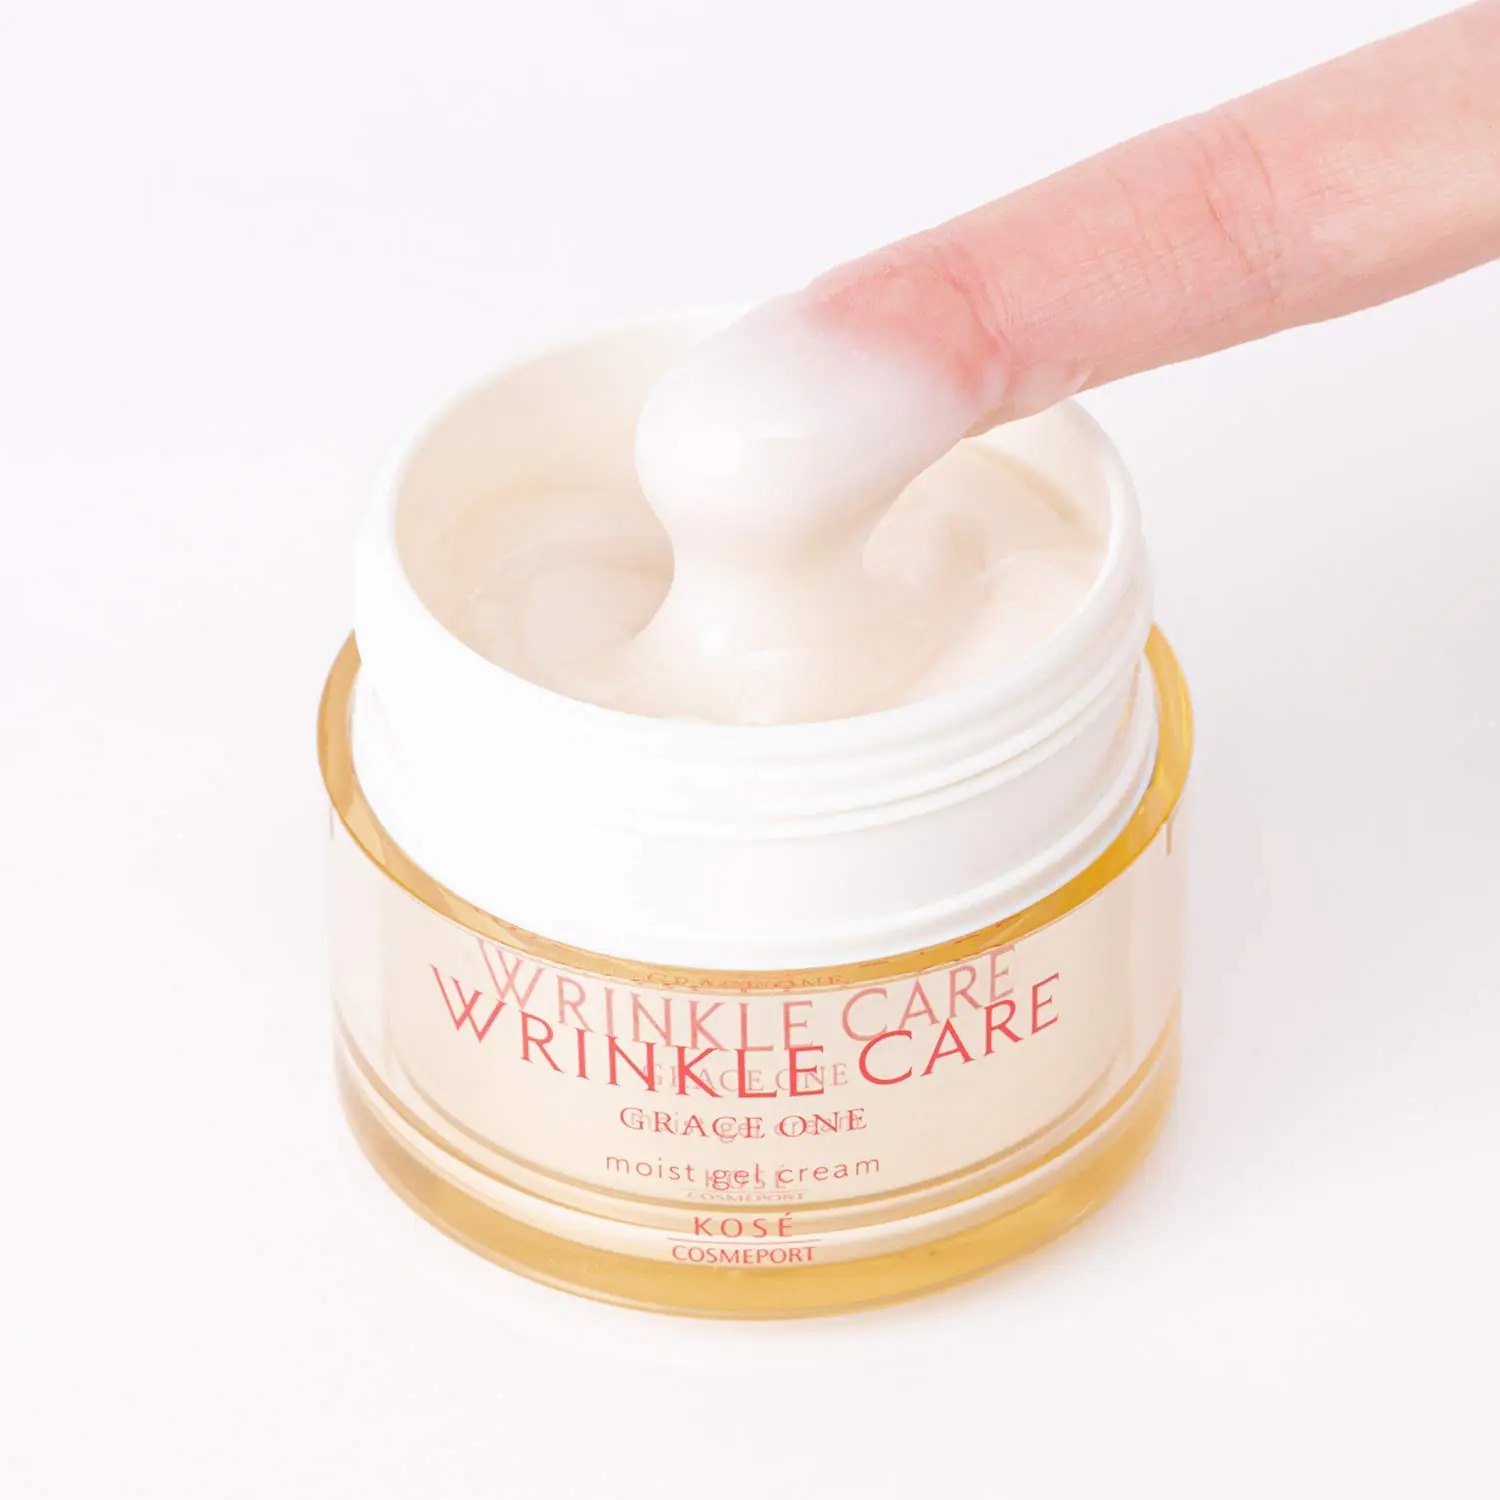 Kose Grace One Wrinkle Care moist gel cream new